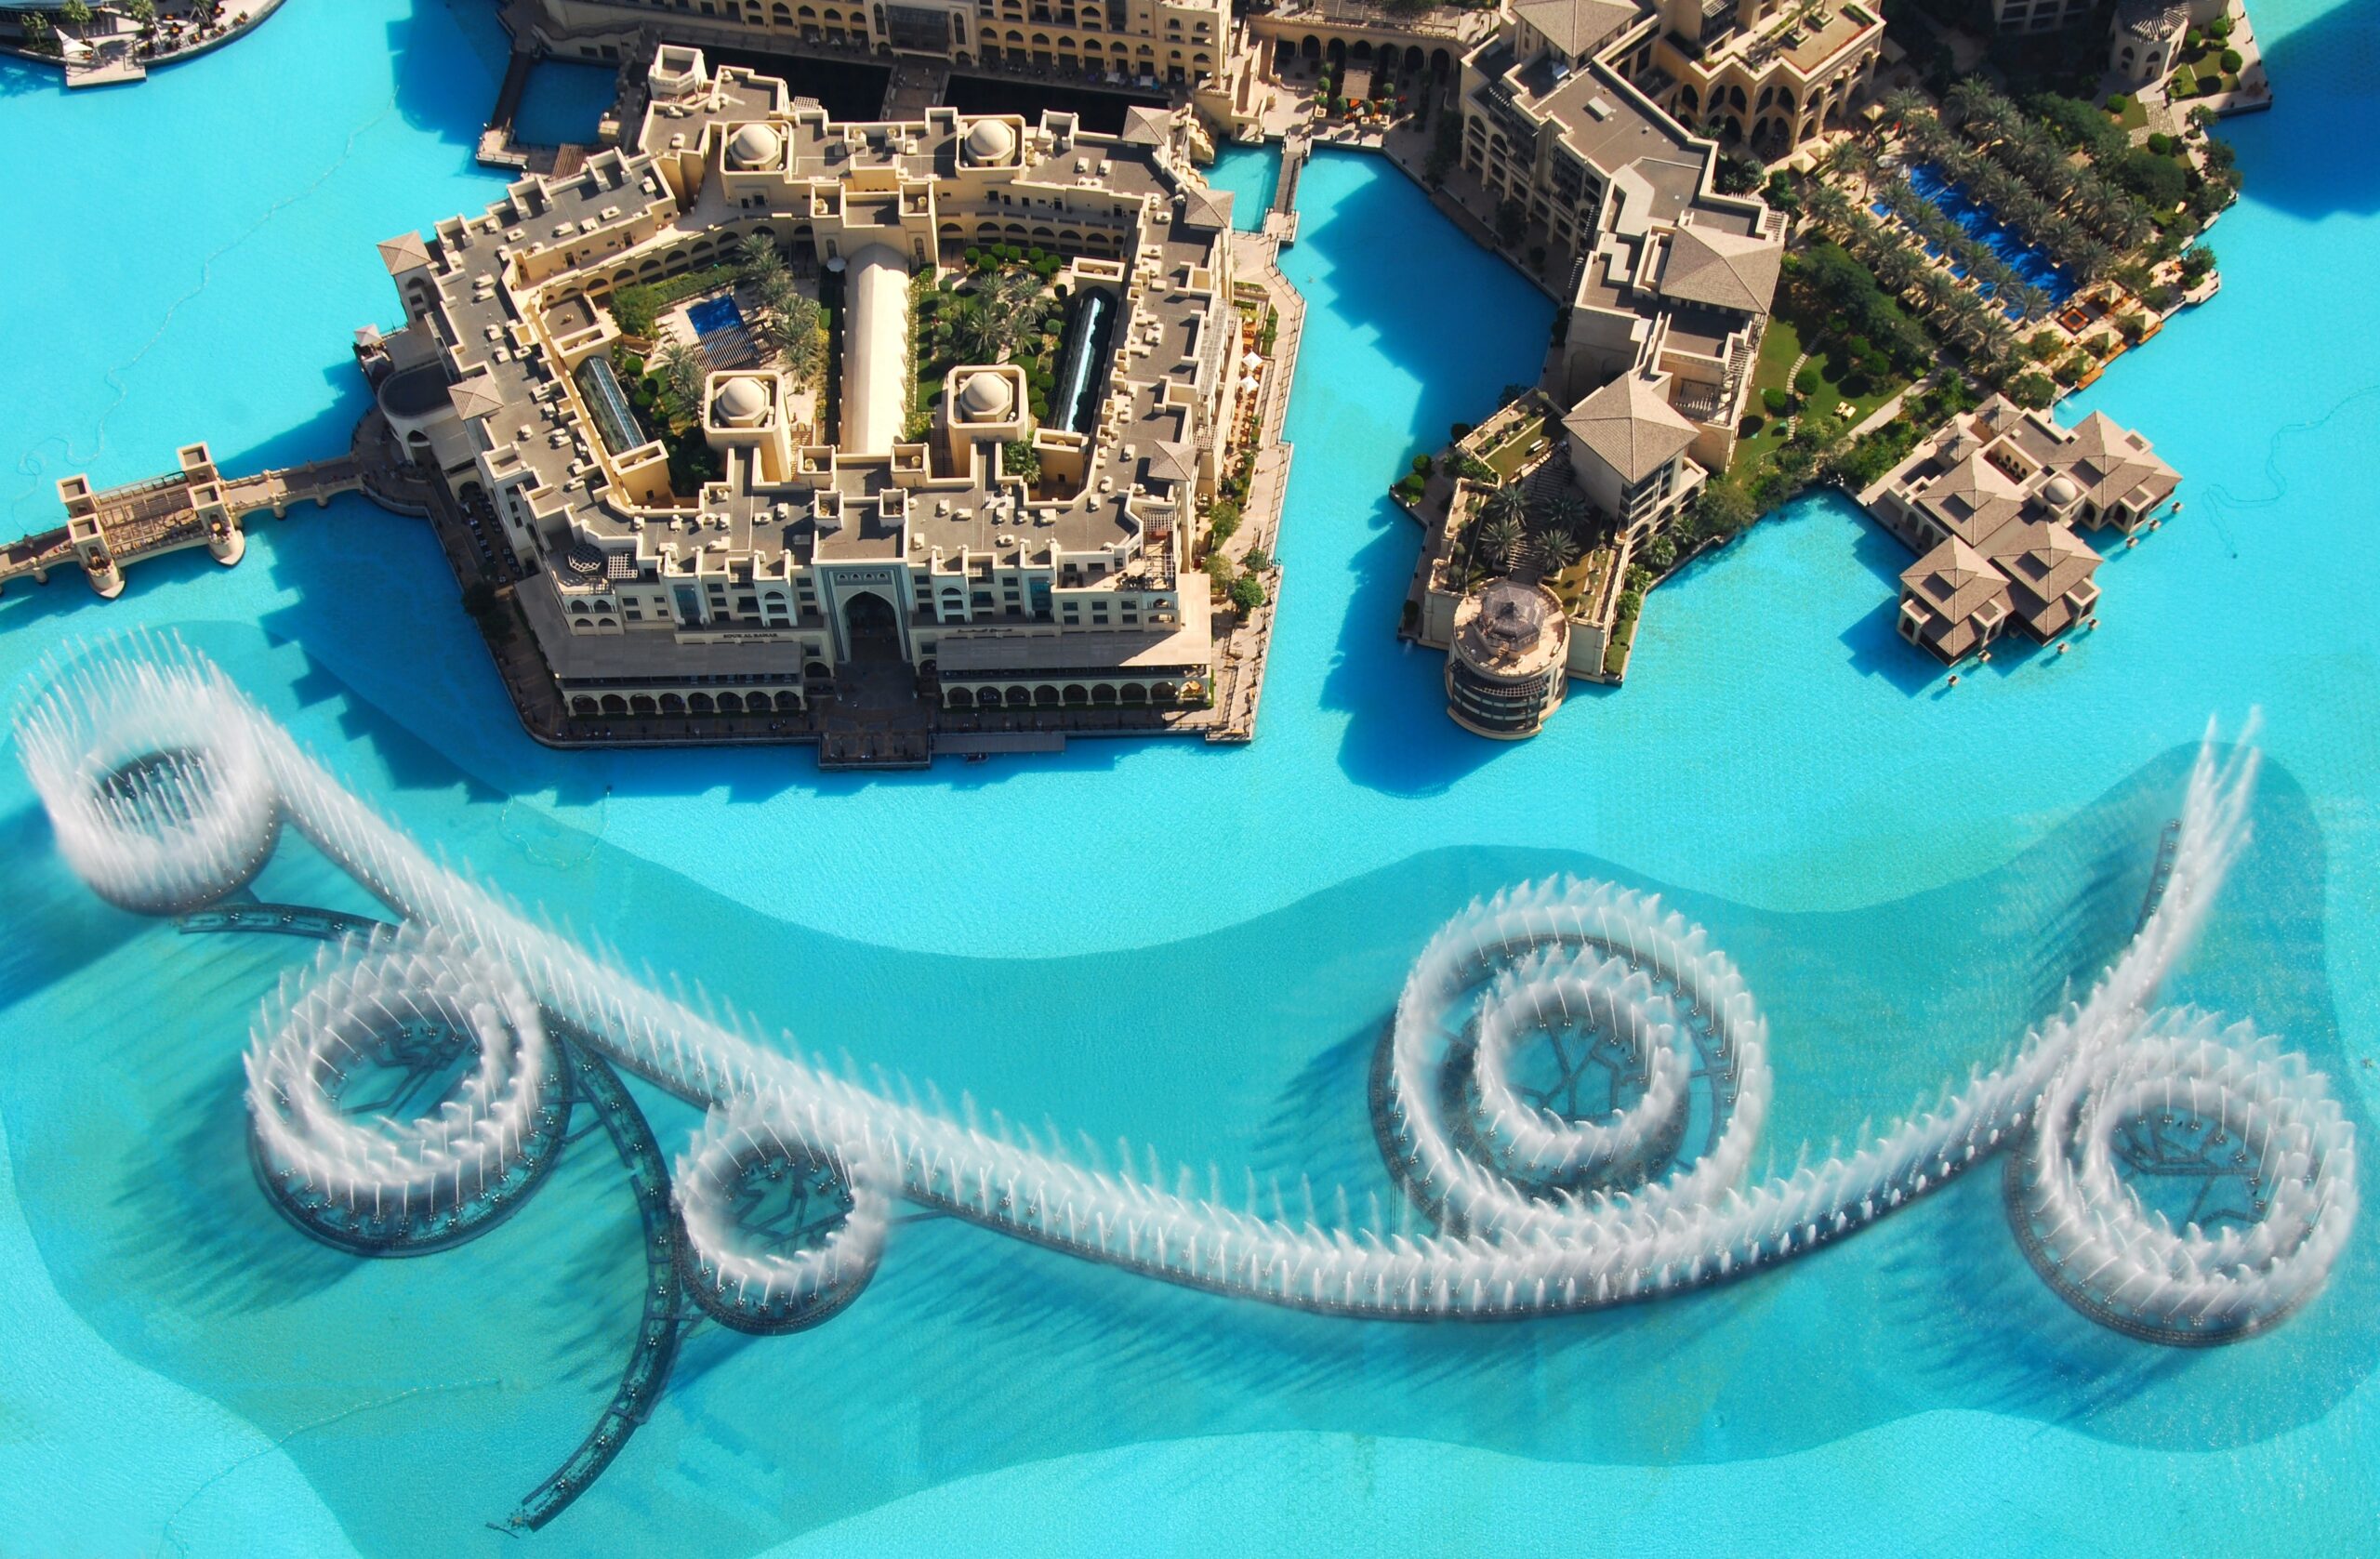 15 Most Expensive Fountains- The Dubai Fountain